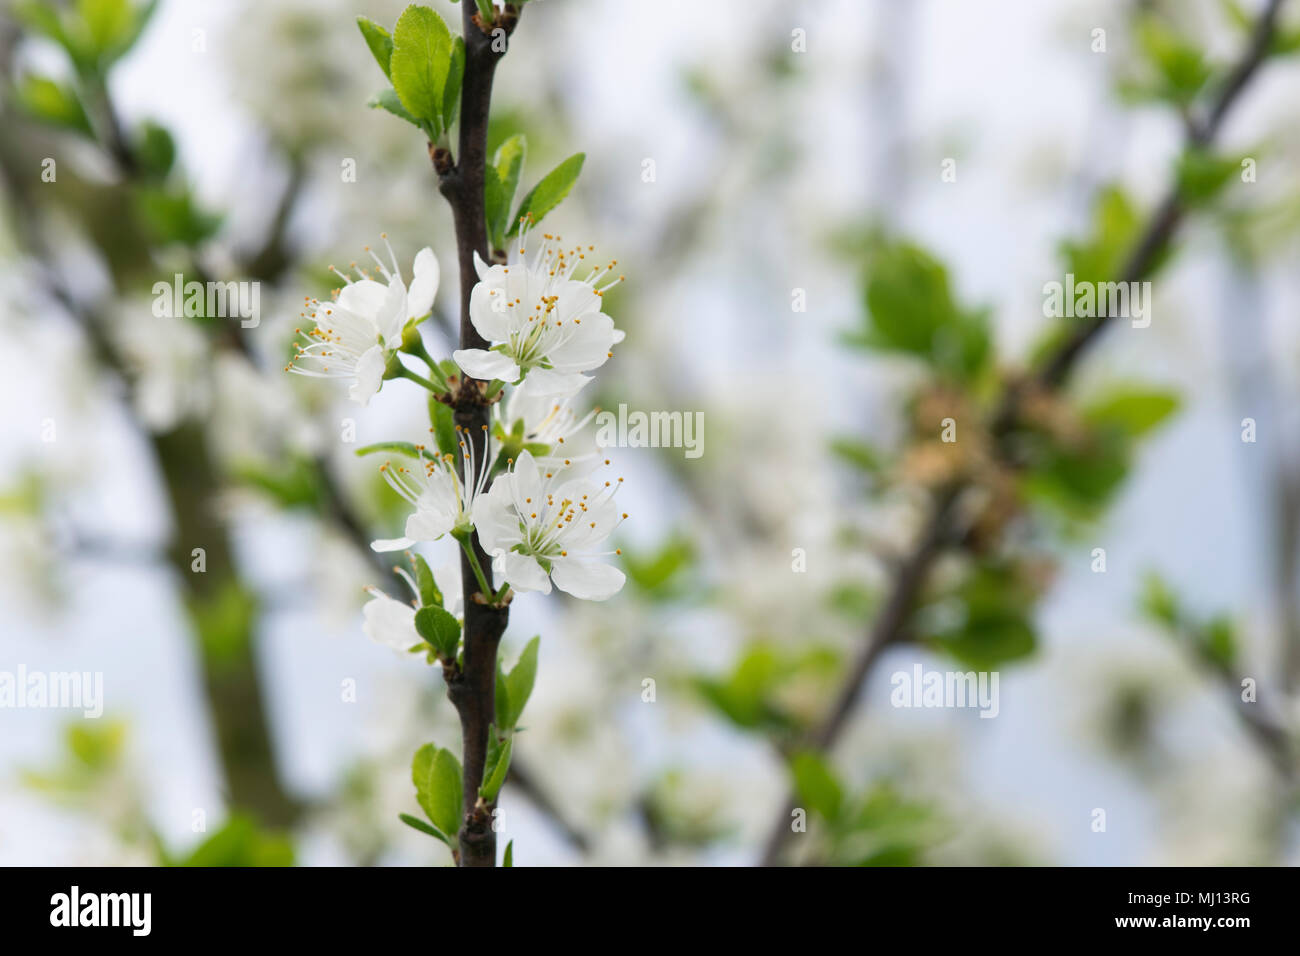 Prunus domestica insititia ‘White Damson’ / Plum blossom in spring Stock Photo